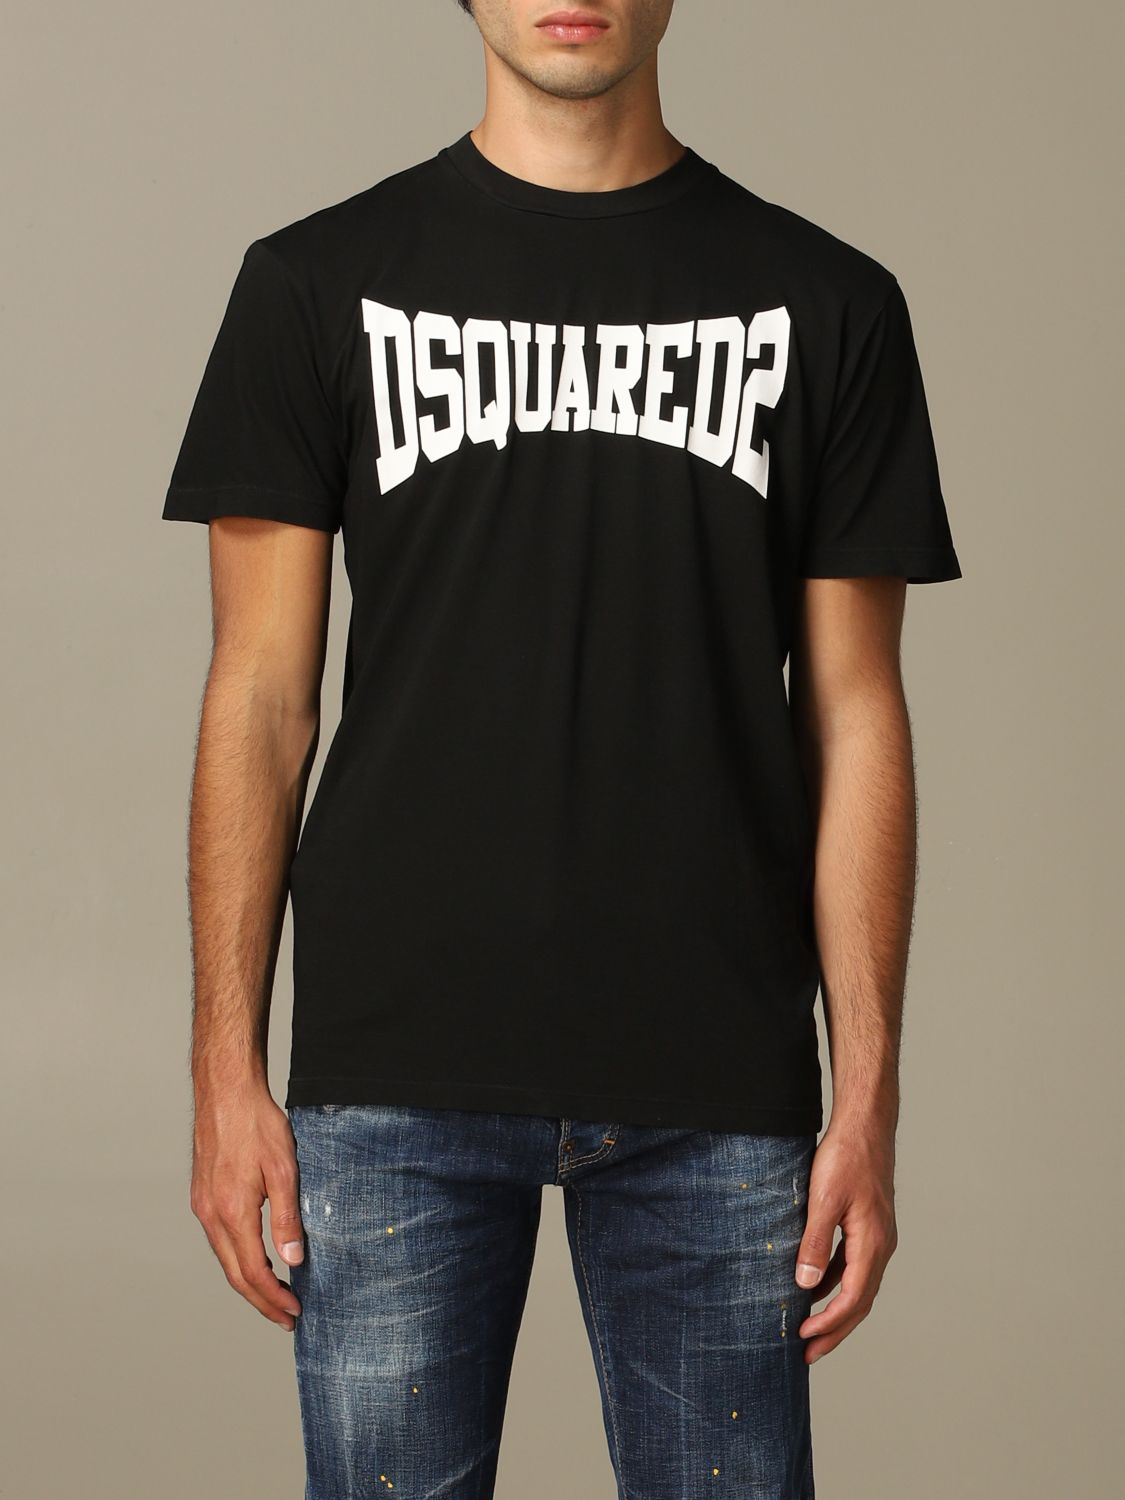 t shirt dsquared2 2016